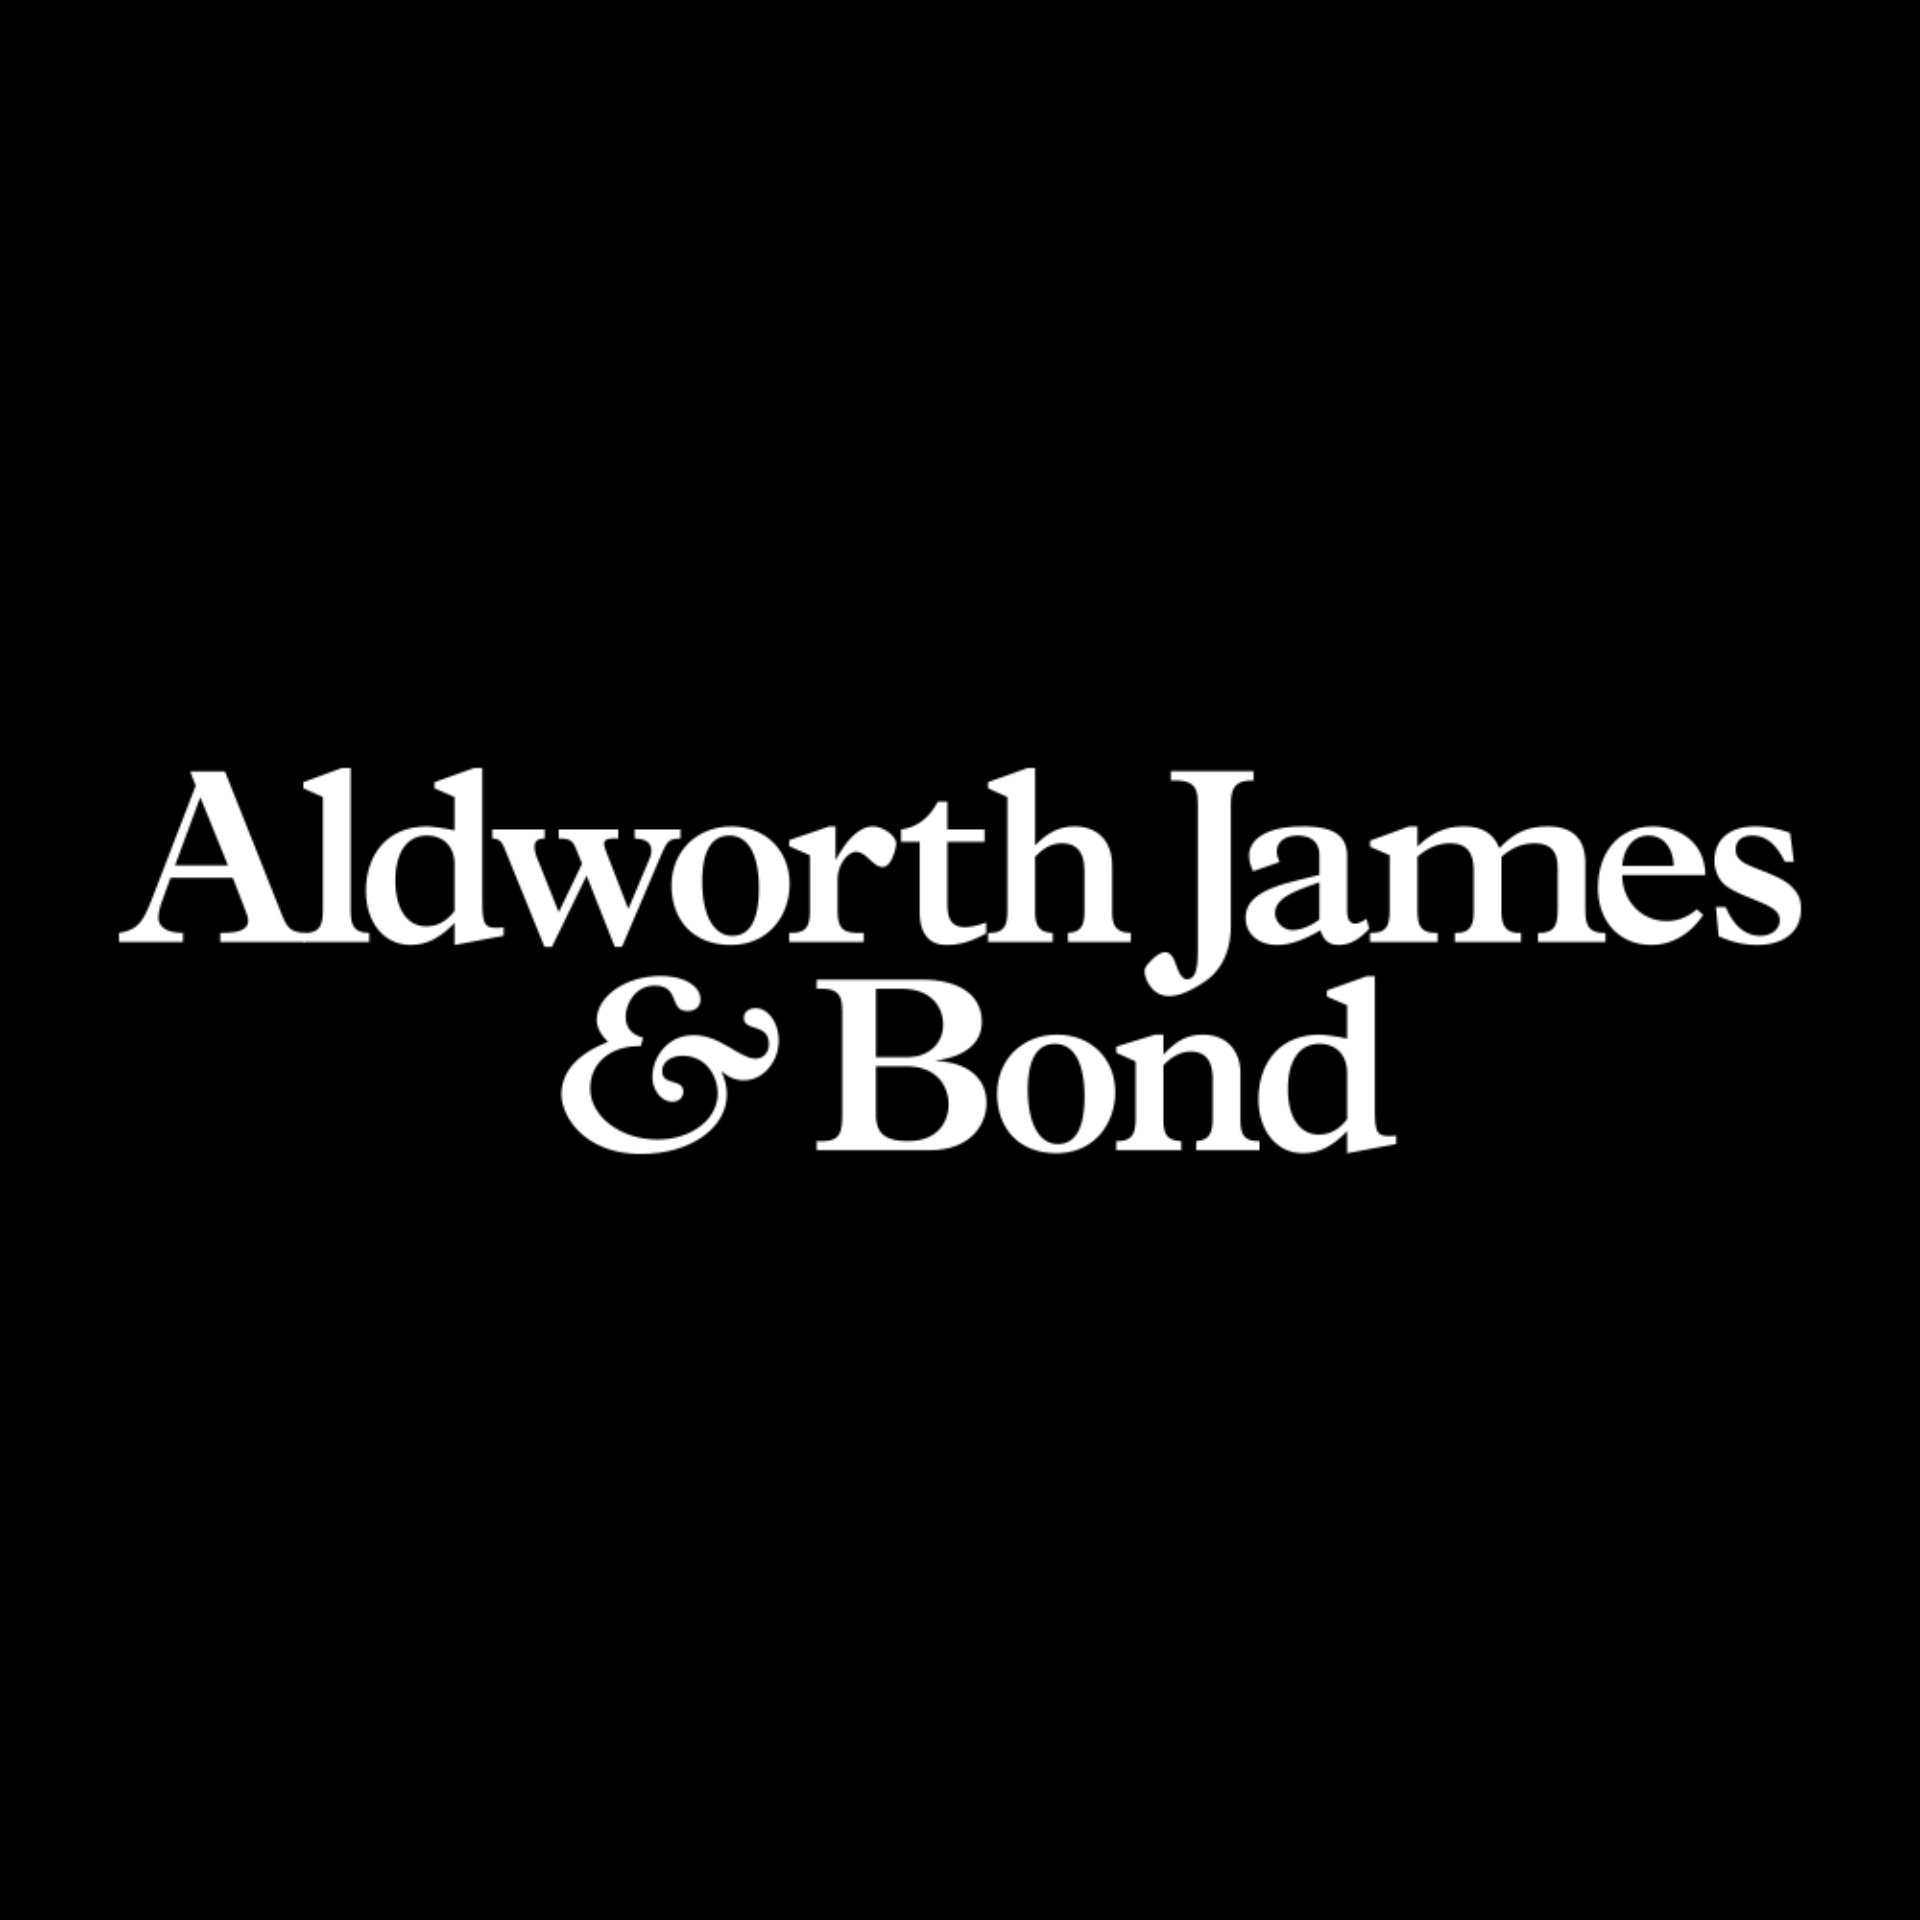 Aldworth James & Bond | Welcome to Aldworth James & Bond